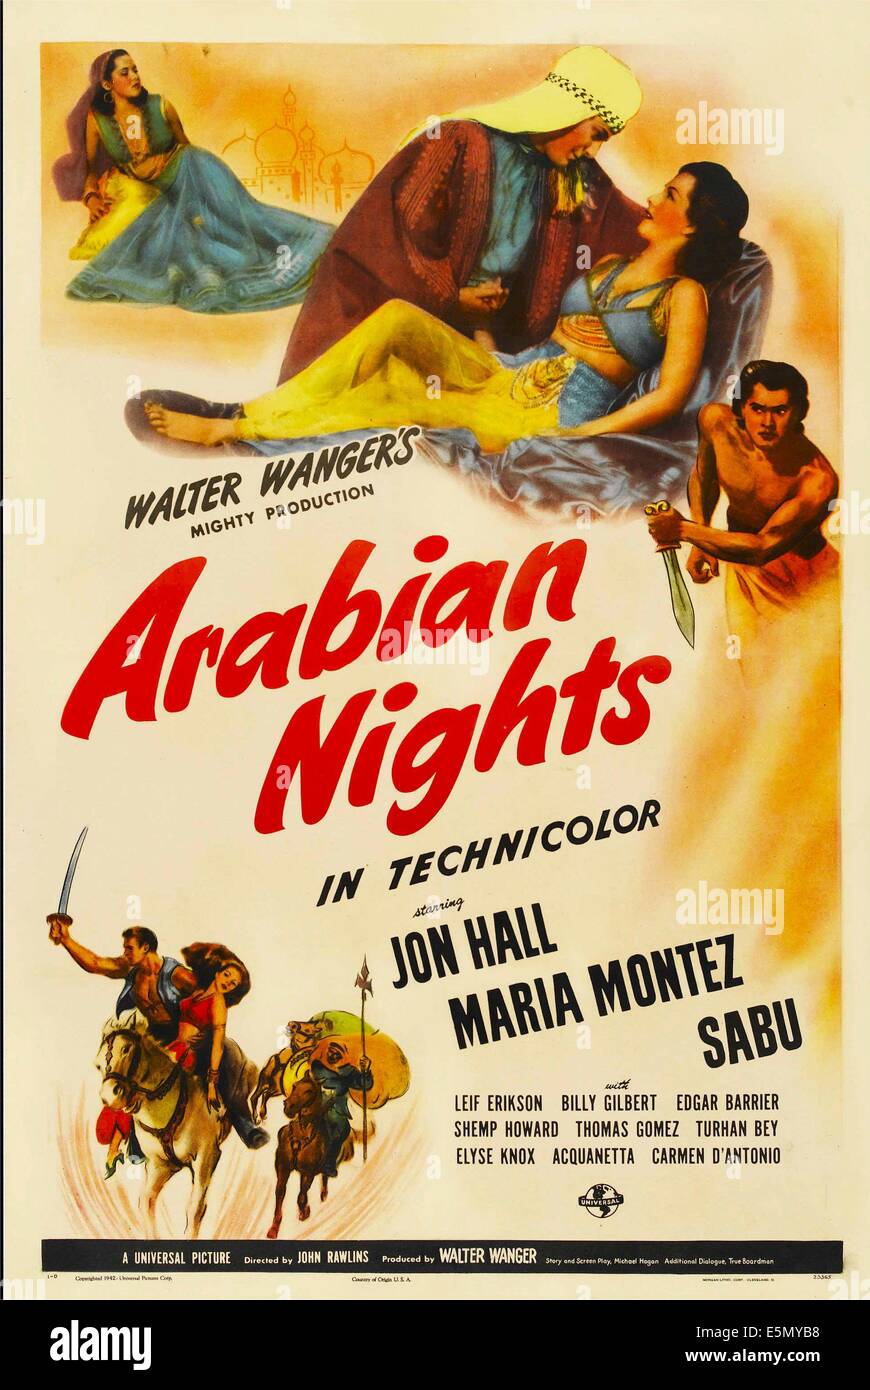 ARABIAN NIGHTS, 1942, Poster art Stock Photo